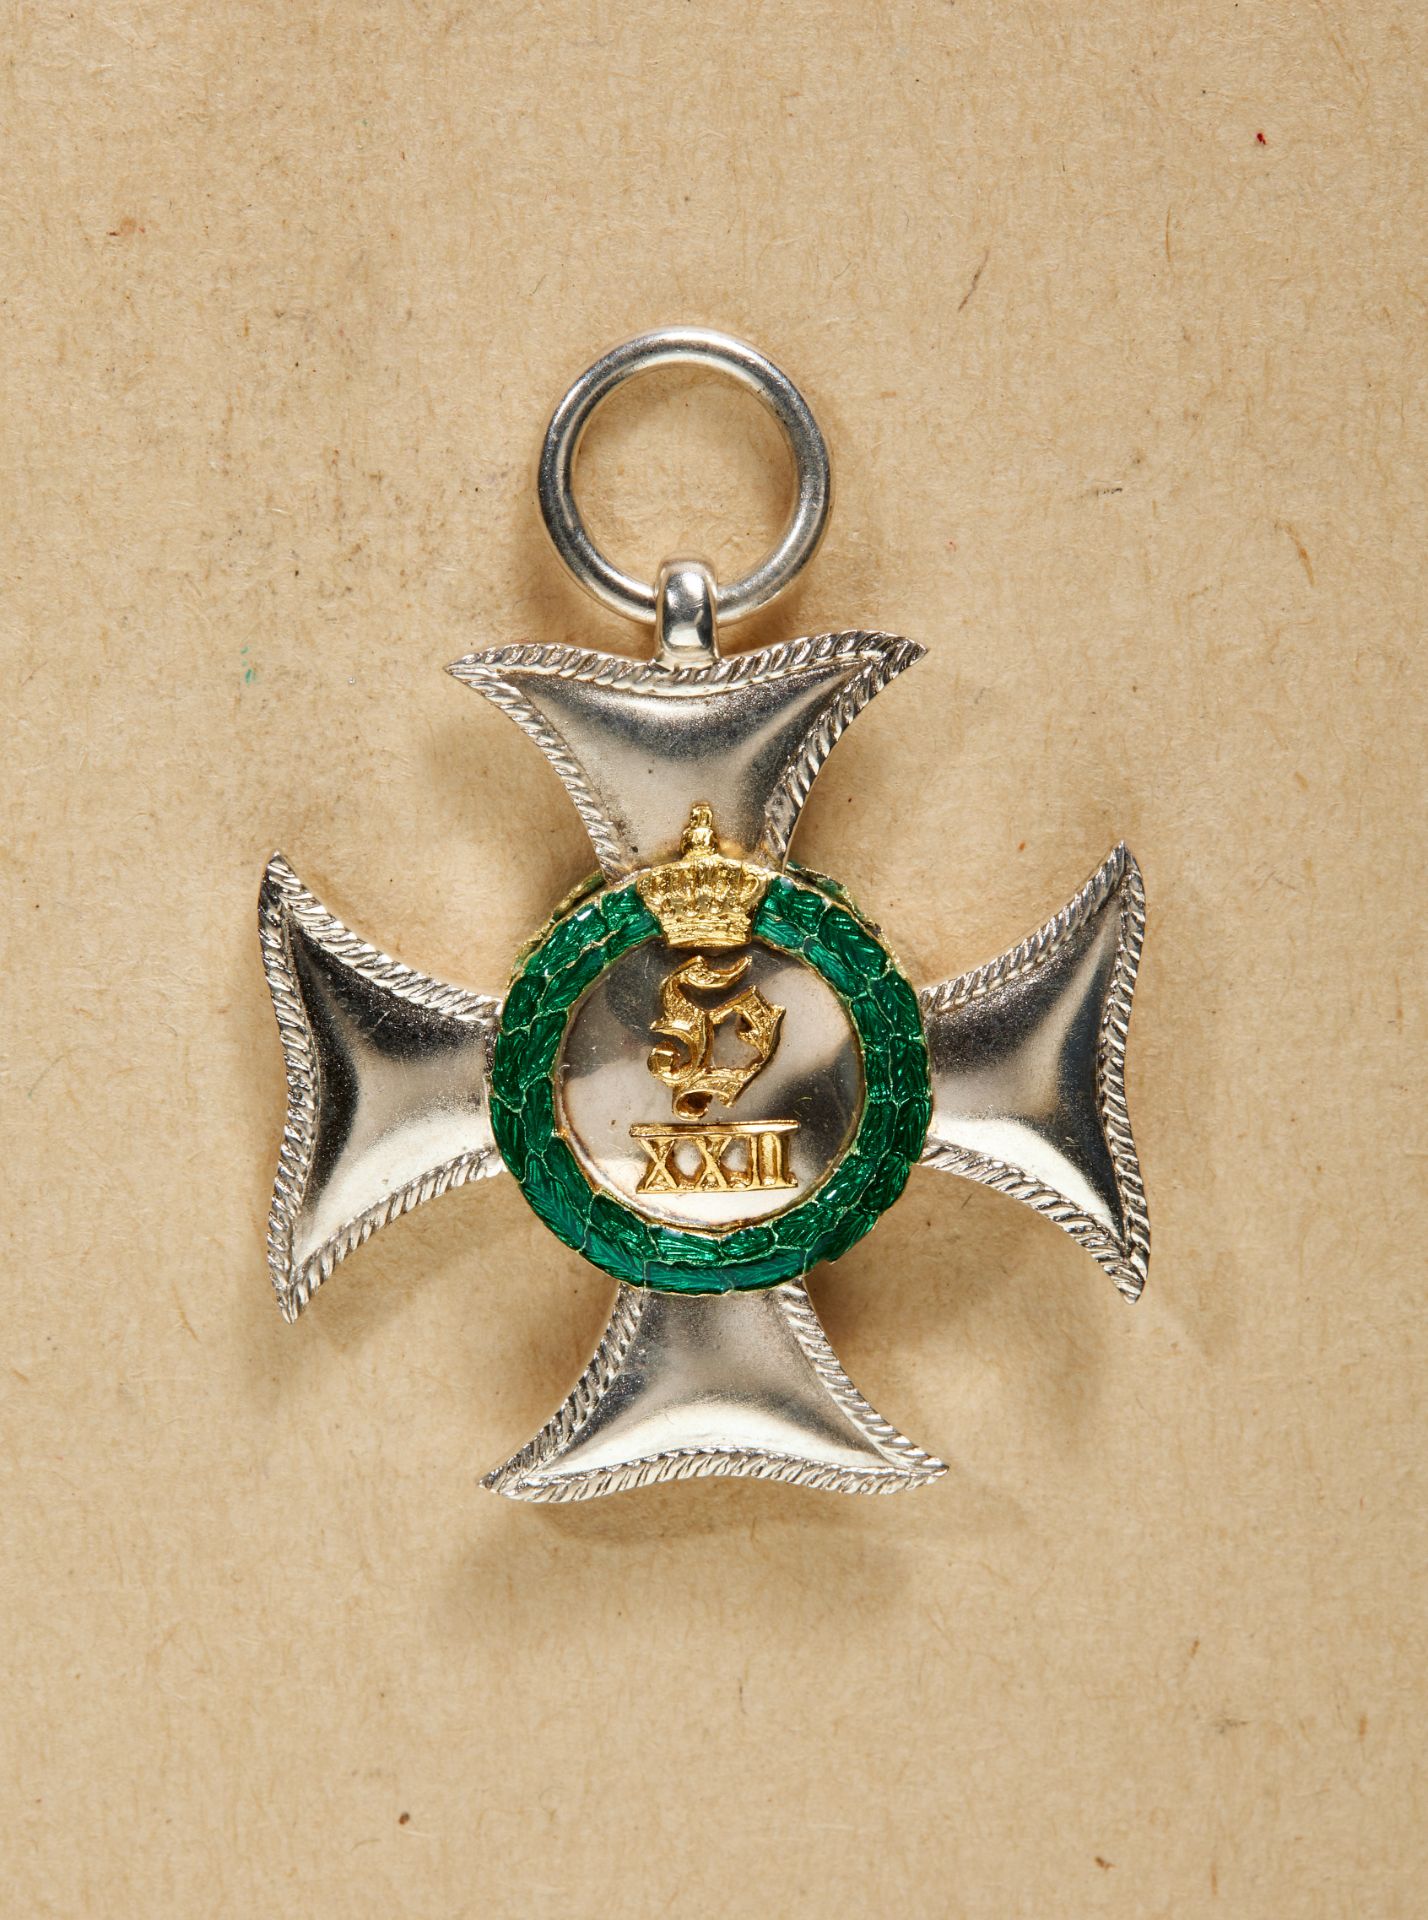 Reuß : Verdienstkreuz 3. Klasse, 1. Abteilung (bis 1893 Zivil - Ehrenkreuz 3. Klasse). 1886-1918.